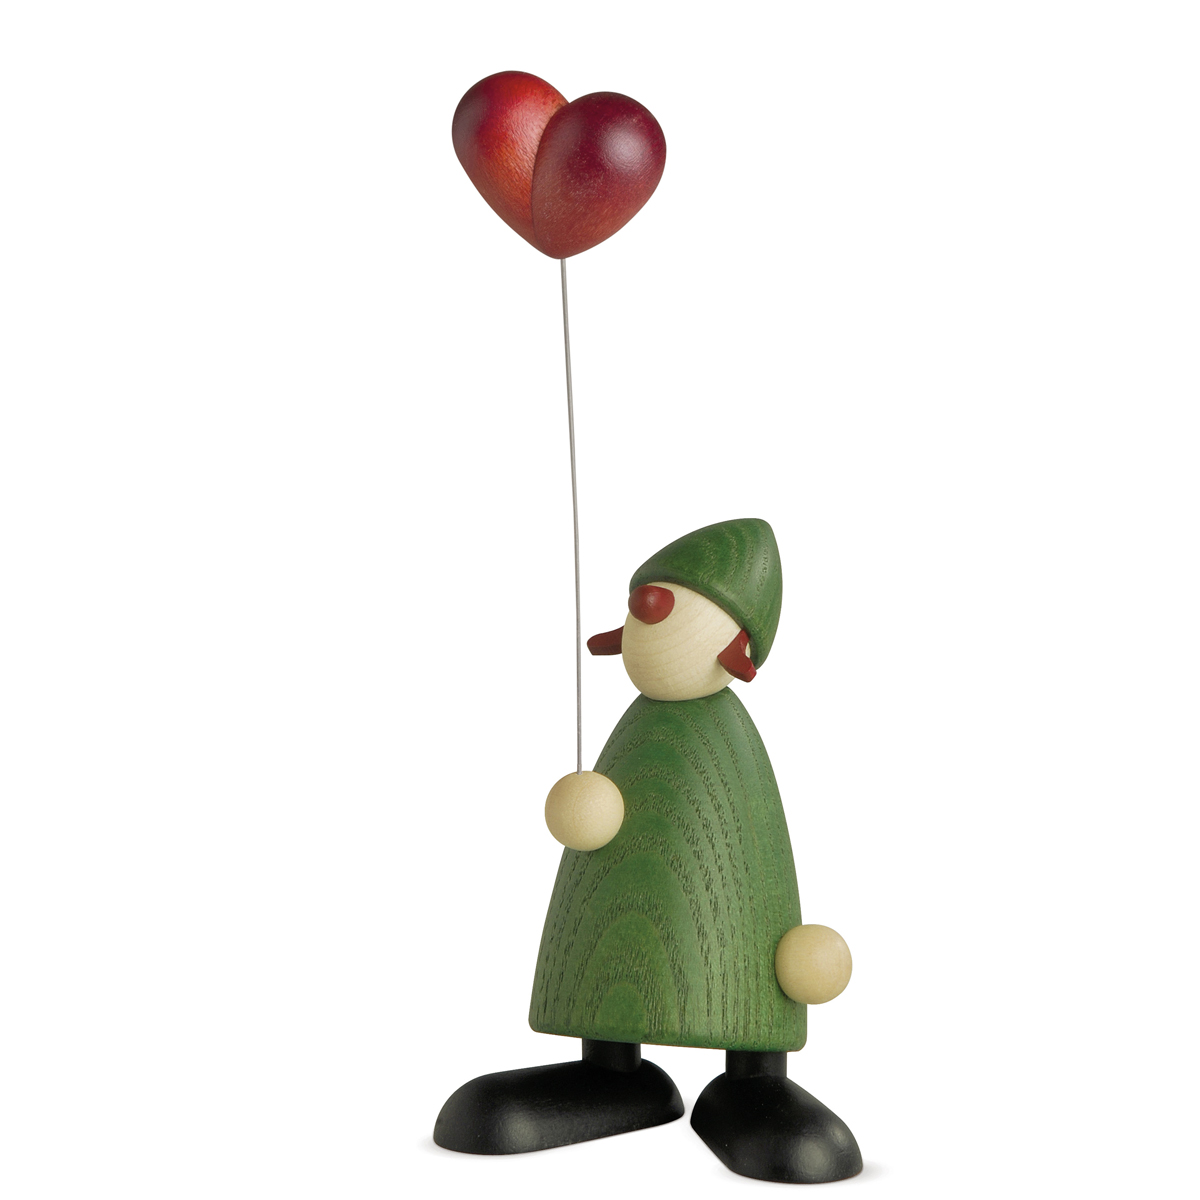 Gratulantin Milena mit rotem Herzballon, grün